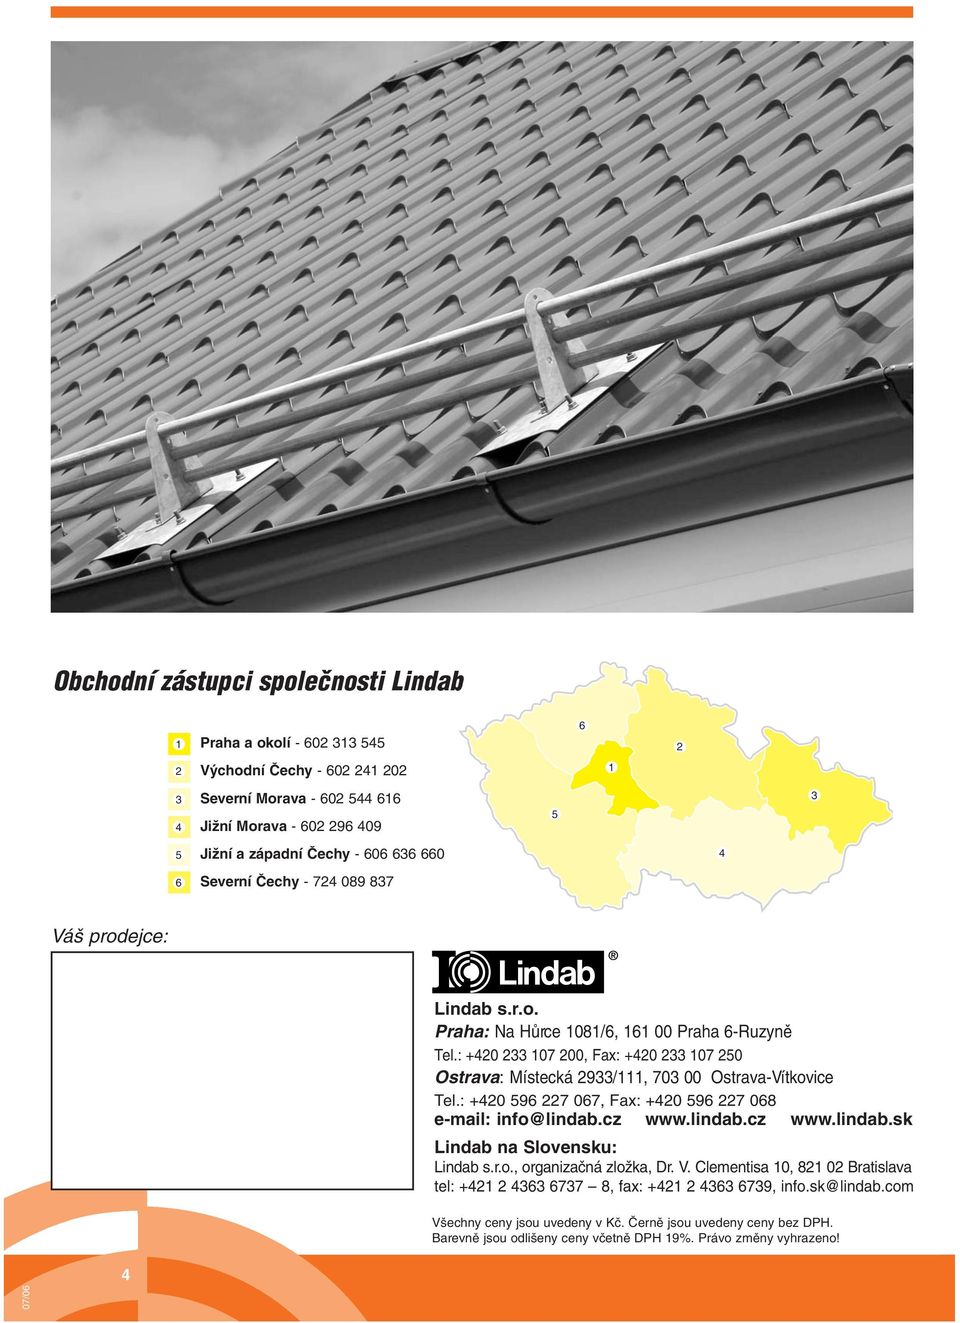 : +0 596 7 067, Fax: +0 596 7 068 e-mail: info@lindab.cz www.lindab.cz www.lindab.sk Lindab na Slovensku: Lindab s.r.o., organizačná zložka, Dr. V.